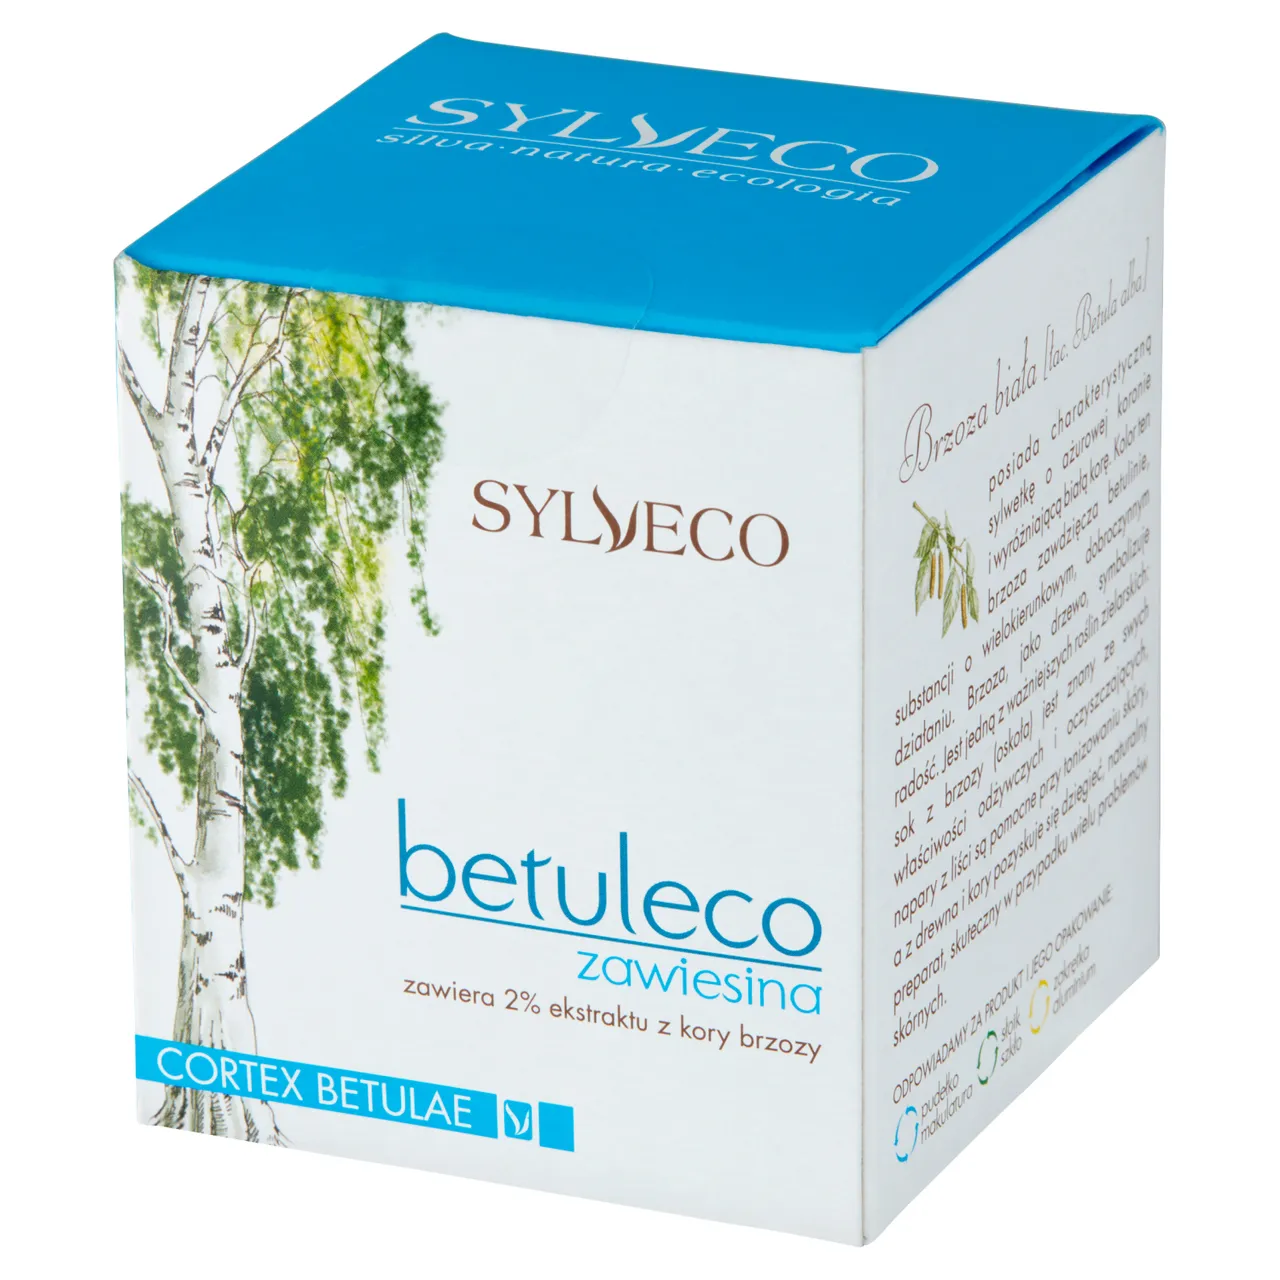 Sylveco, Betuleco, zawiesina,  110 ml